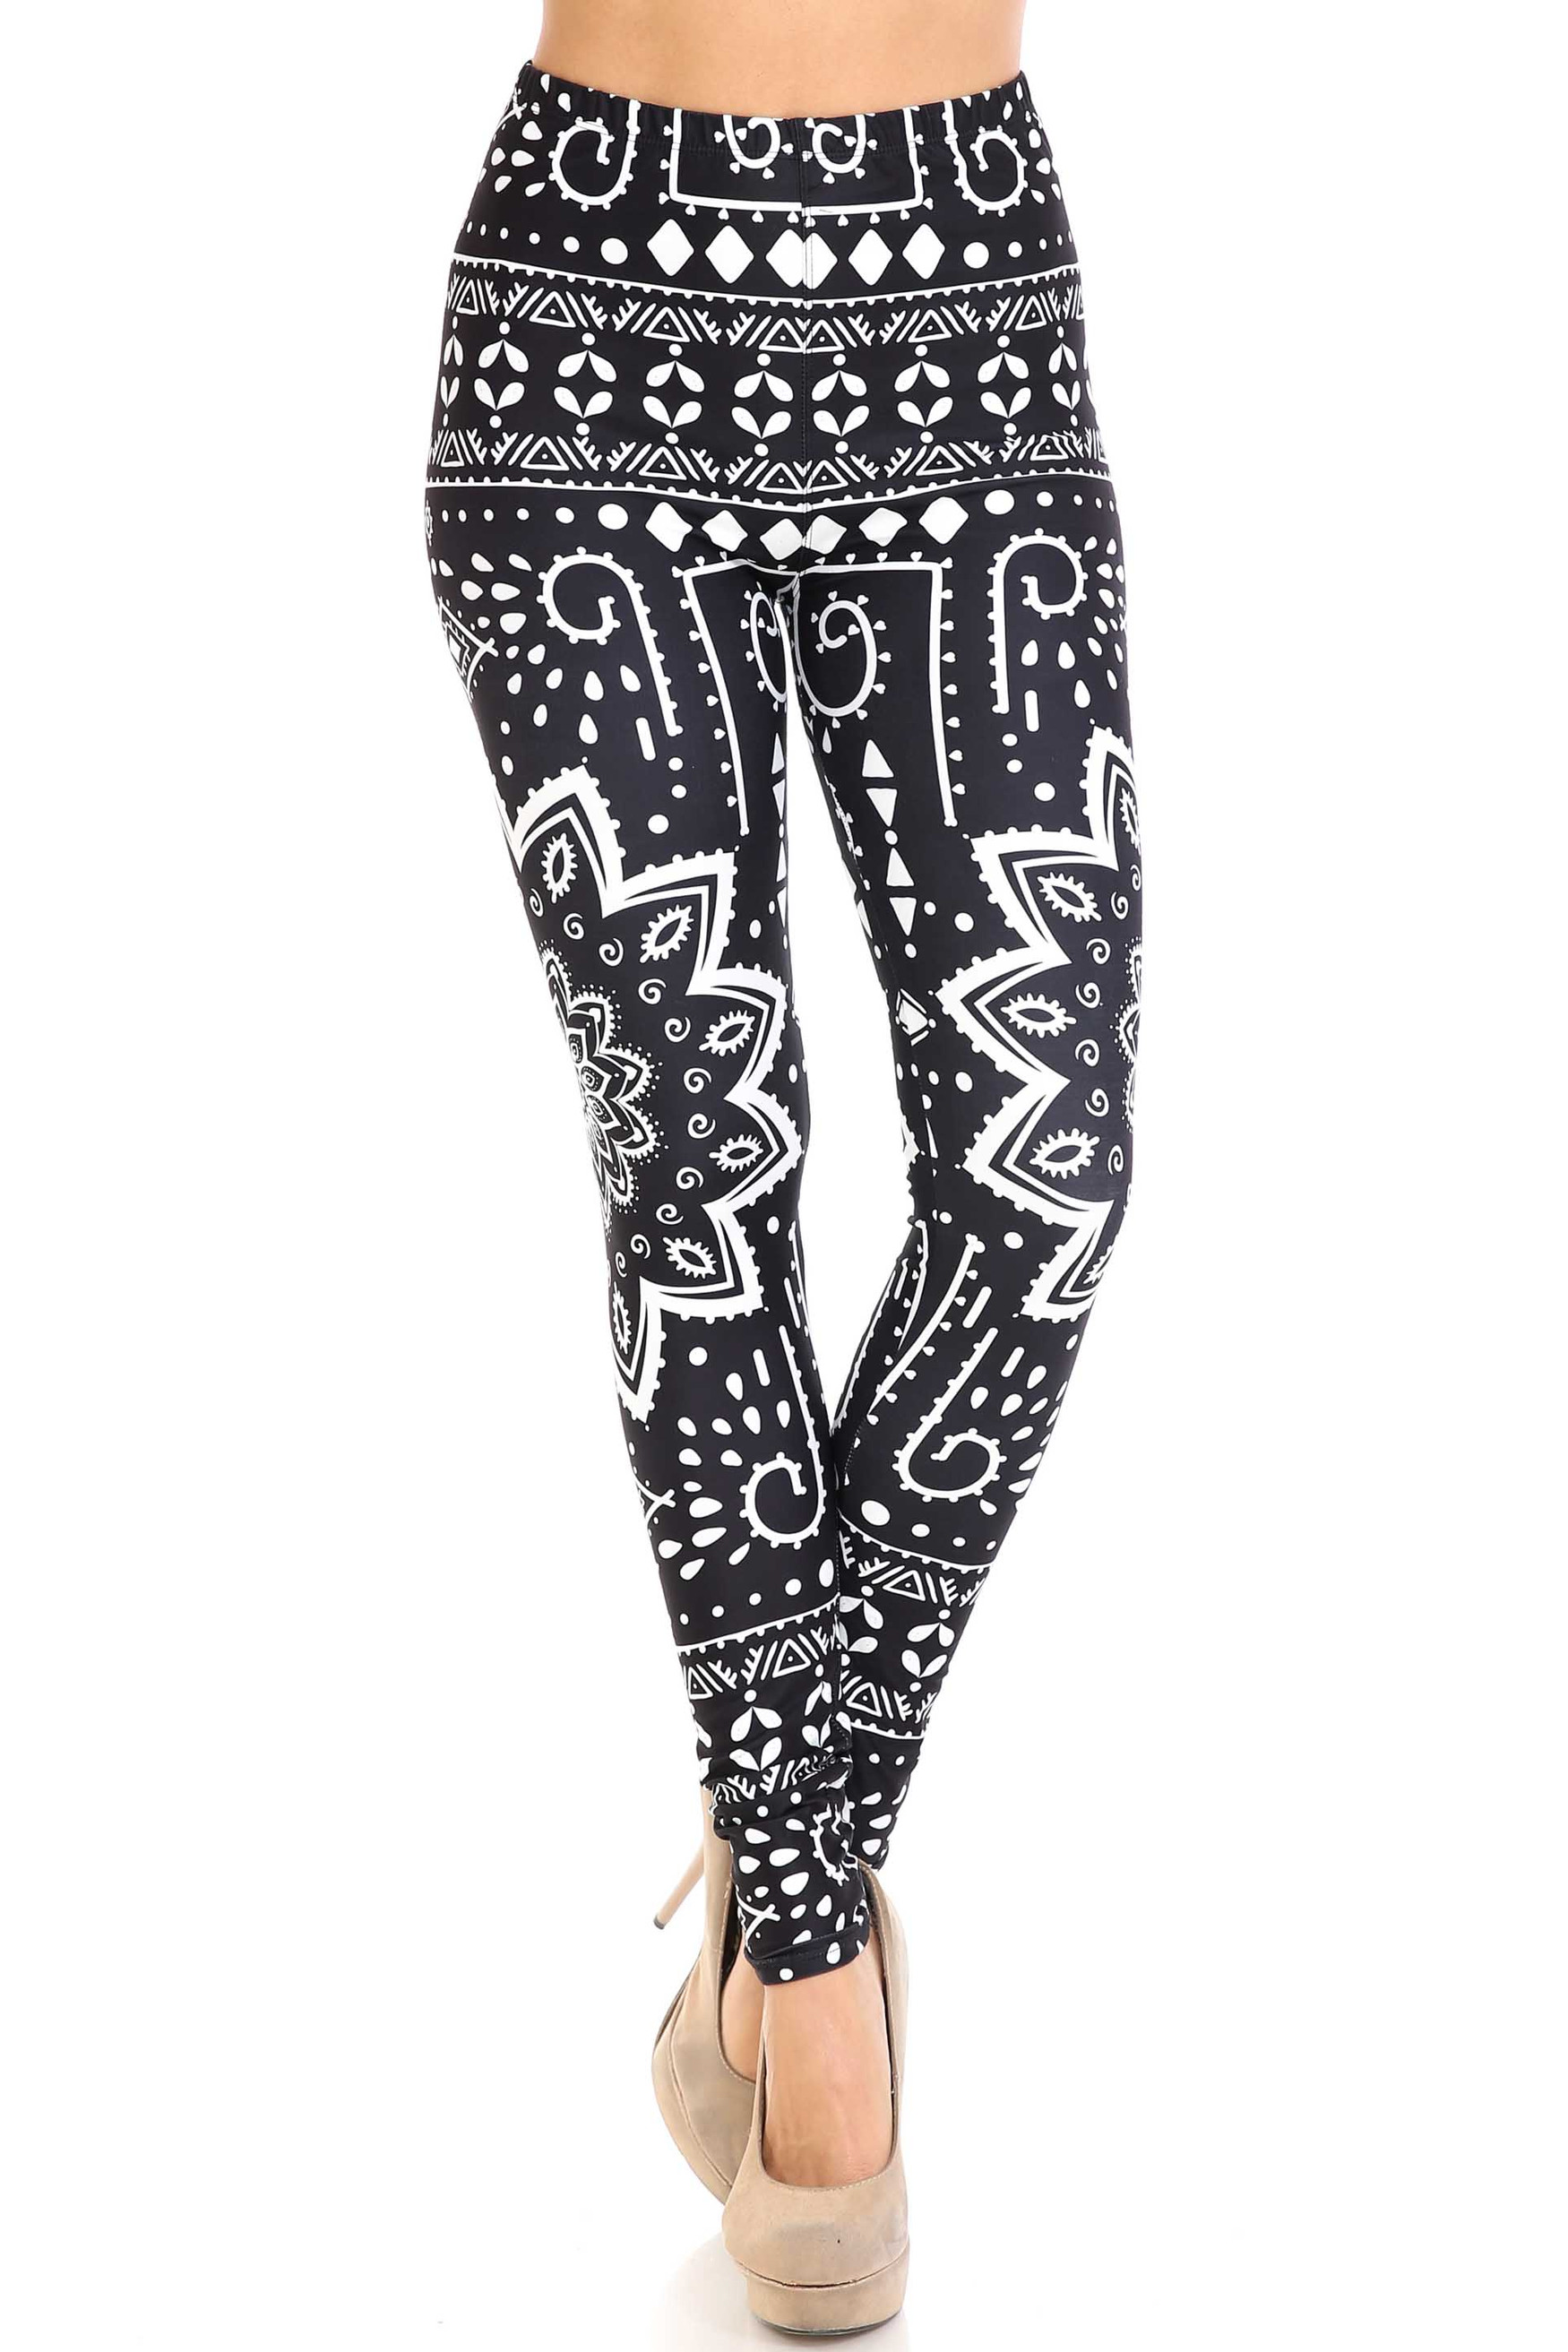 Creamy Soft Black Tribal Mandala Plus Size Leggings - By USA Fashion™